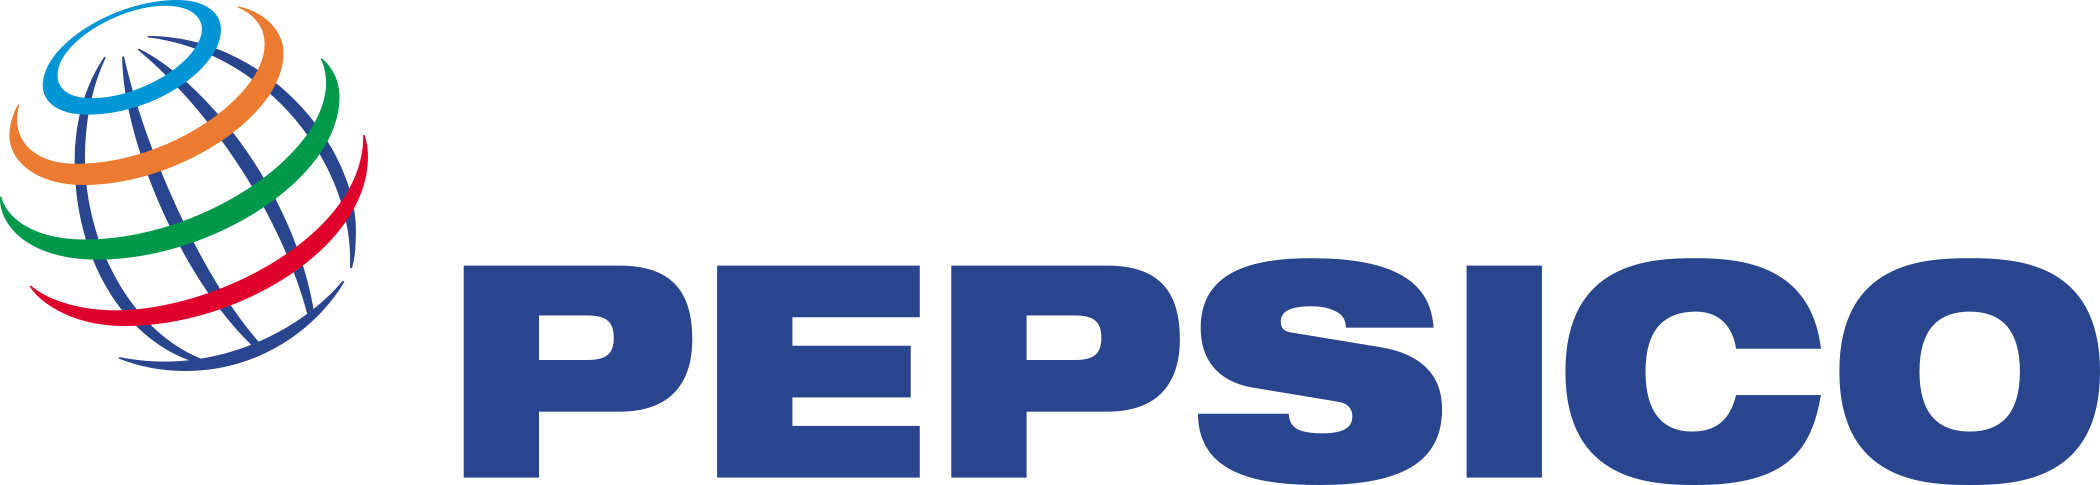 pepsico logo 1 - PepsiCo Logo